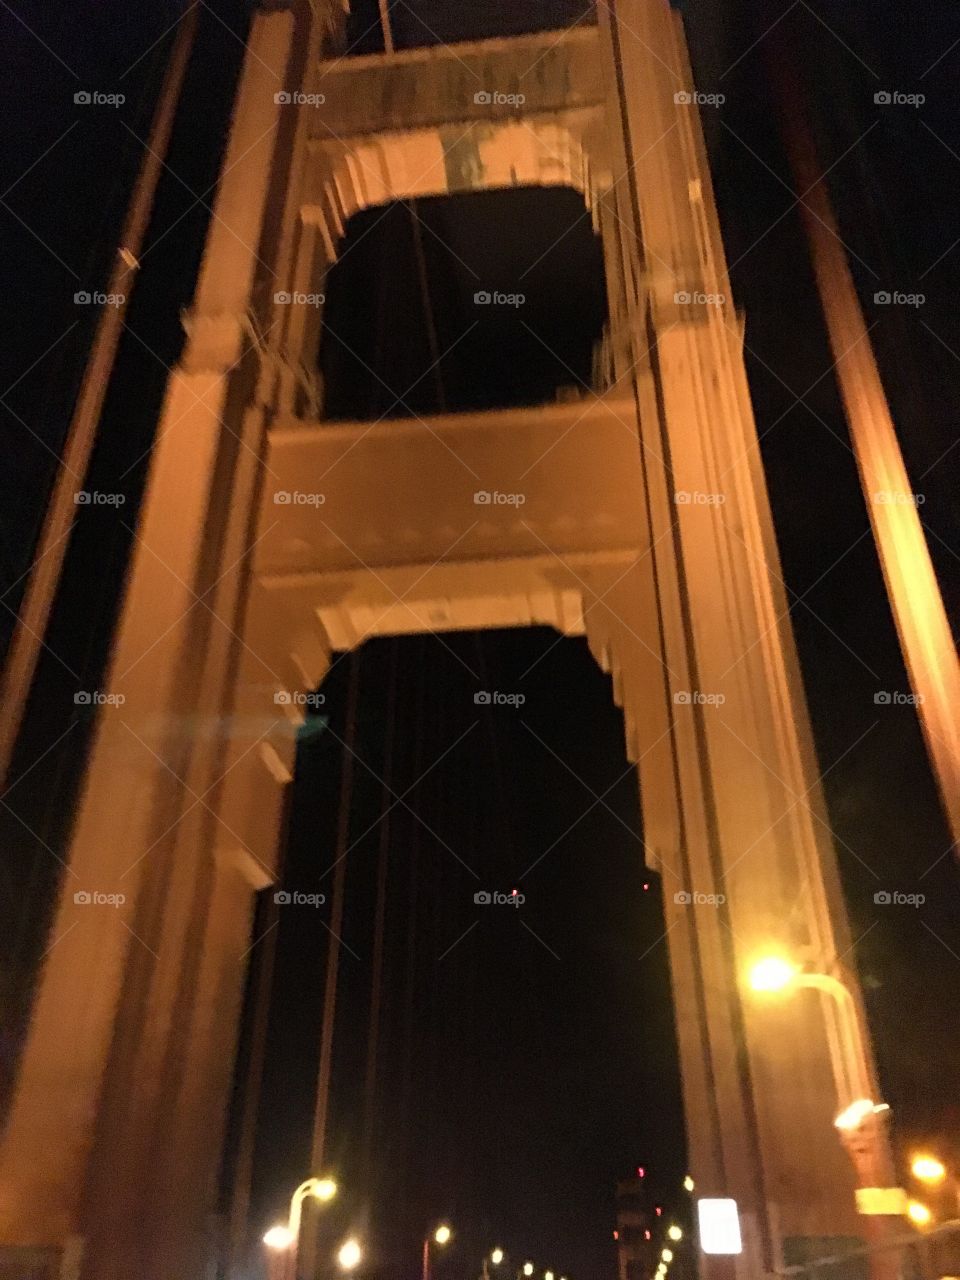 Crossing the Golden gate Bridge at night